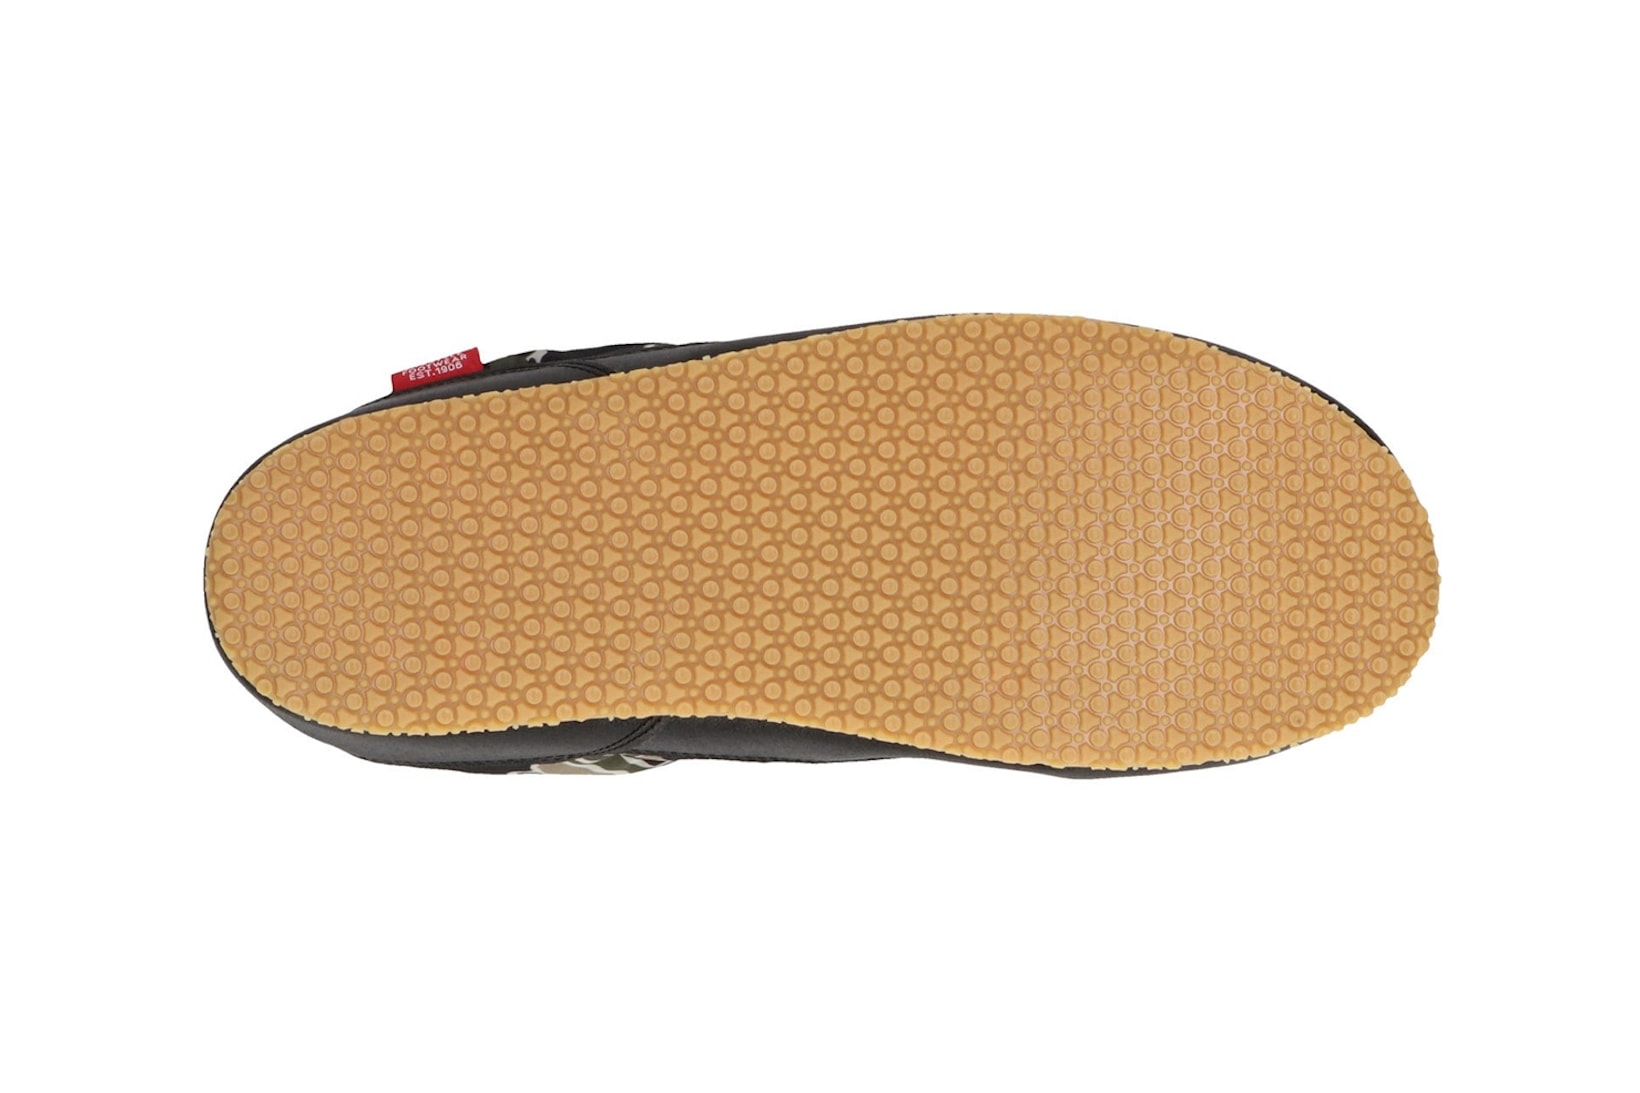 New Balance Caravan Moc Low Slip-Ons Slippers Camo Black Footwear Shoes